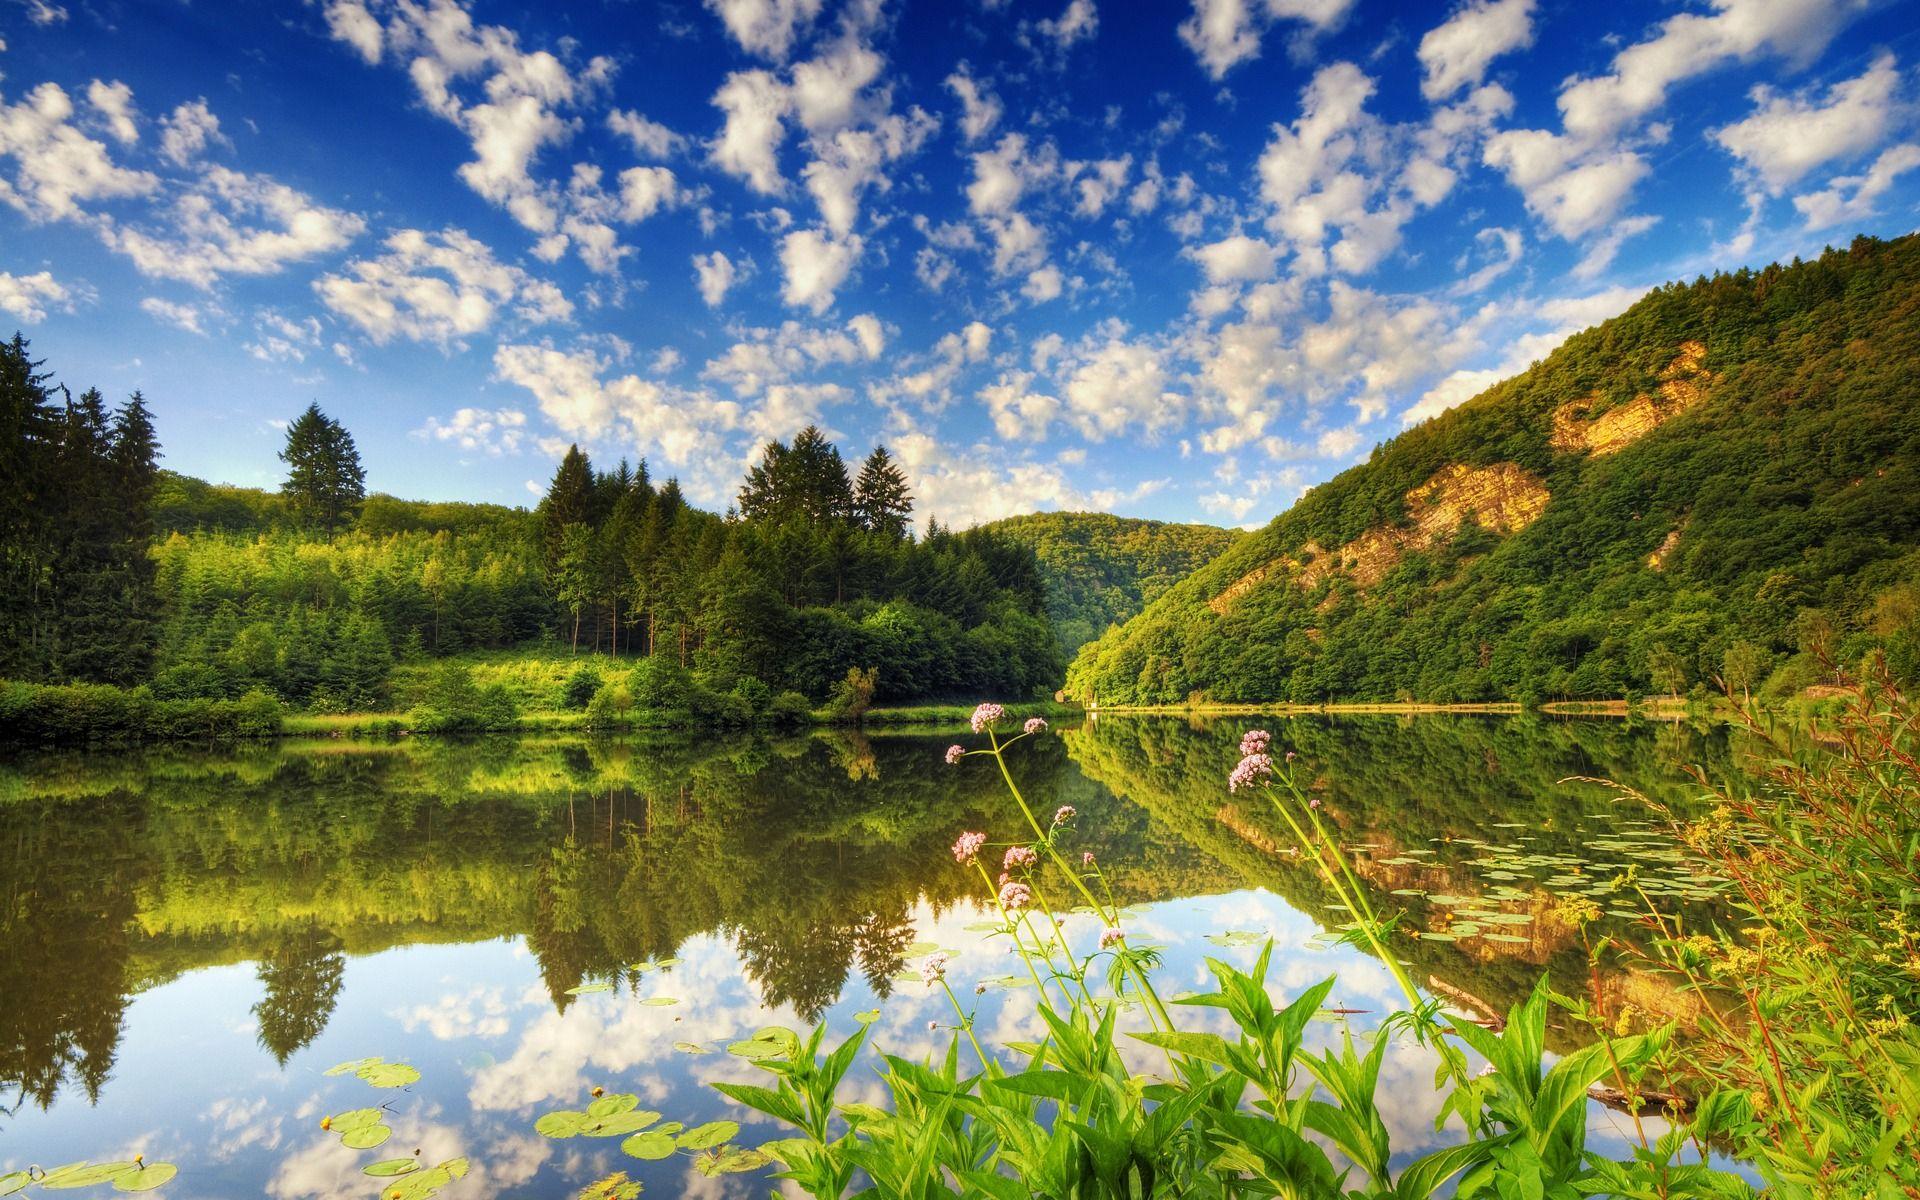 Breathtaking Landscape Wallpaper Landscape Nature Wallpaper in jpg format for free download